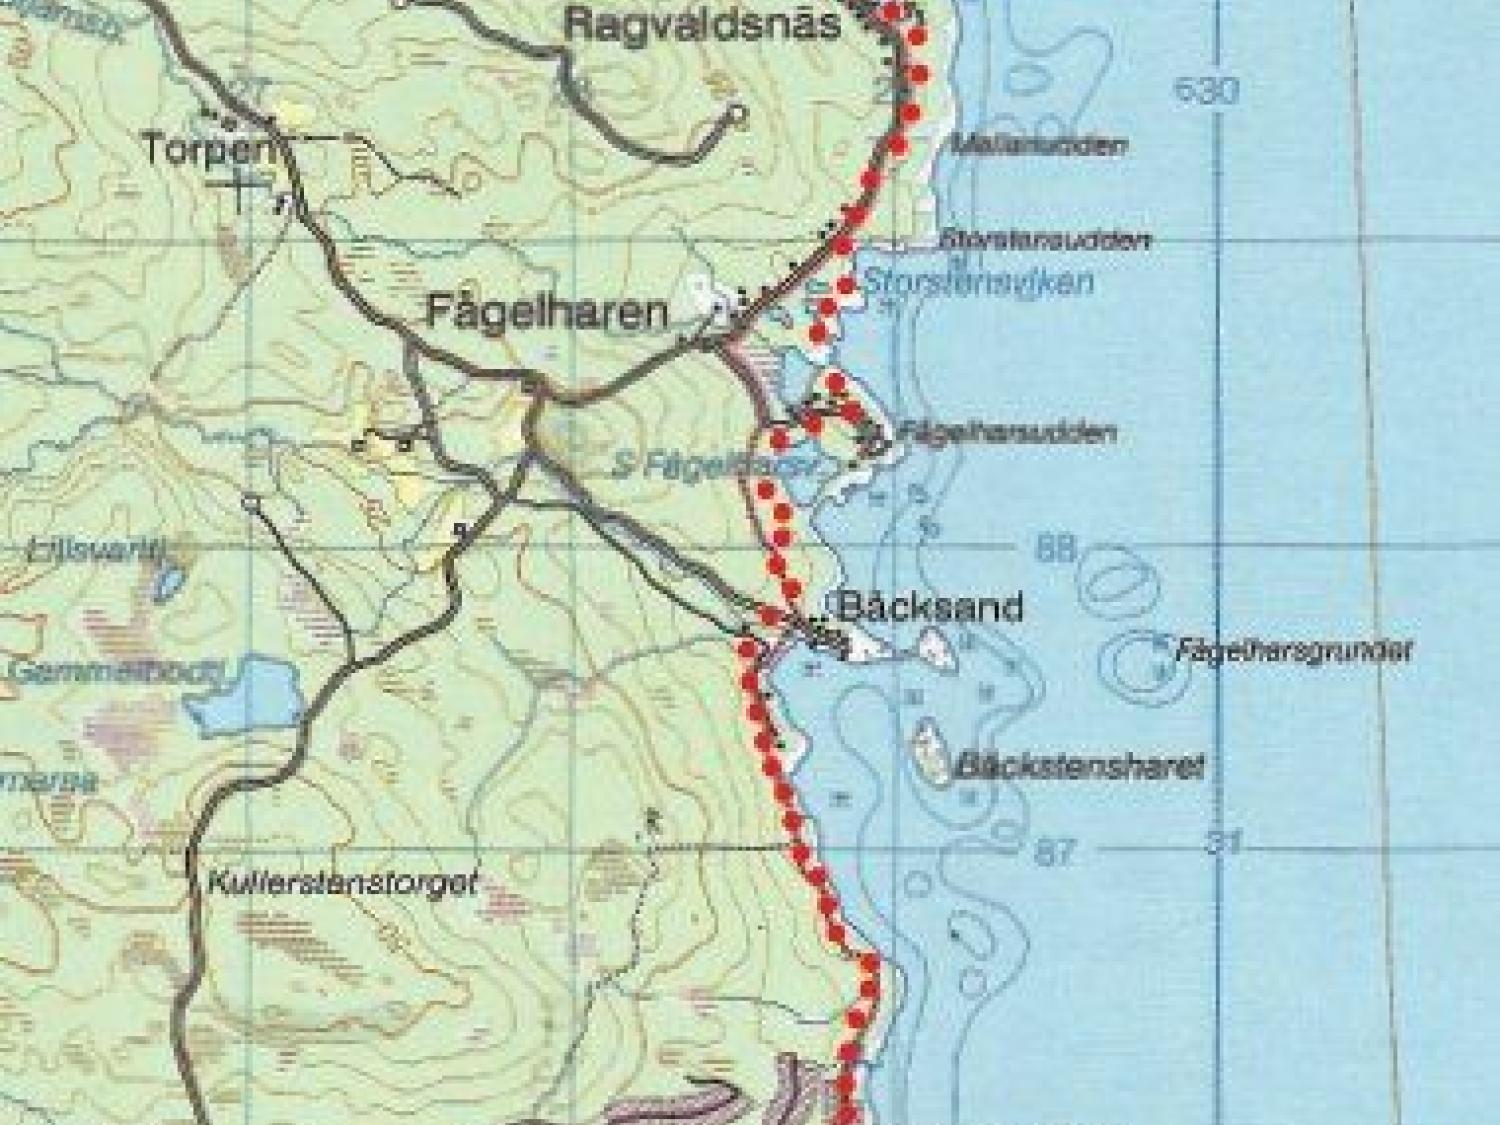 Kustleden - The Coastal Trail